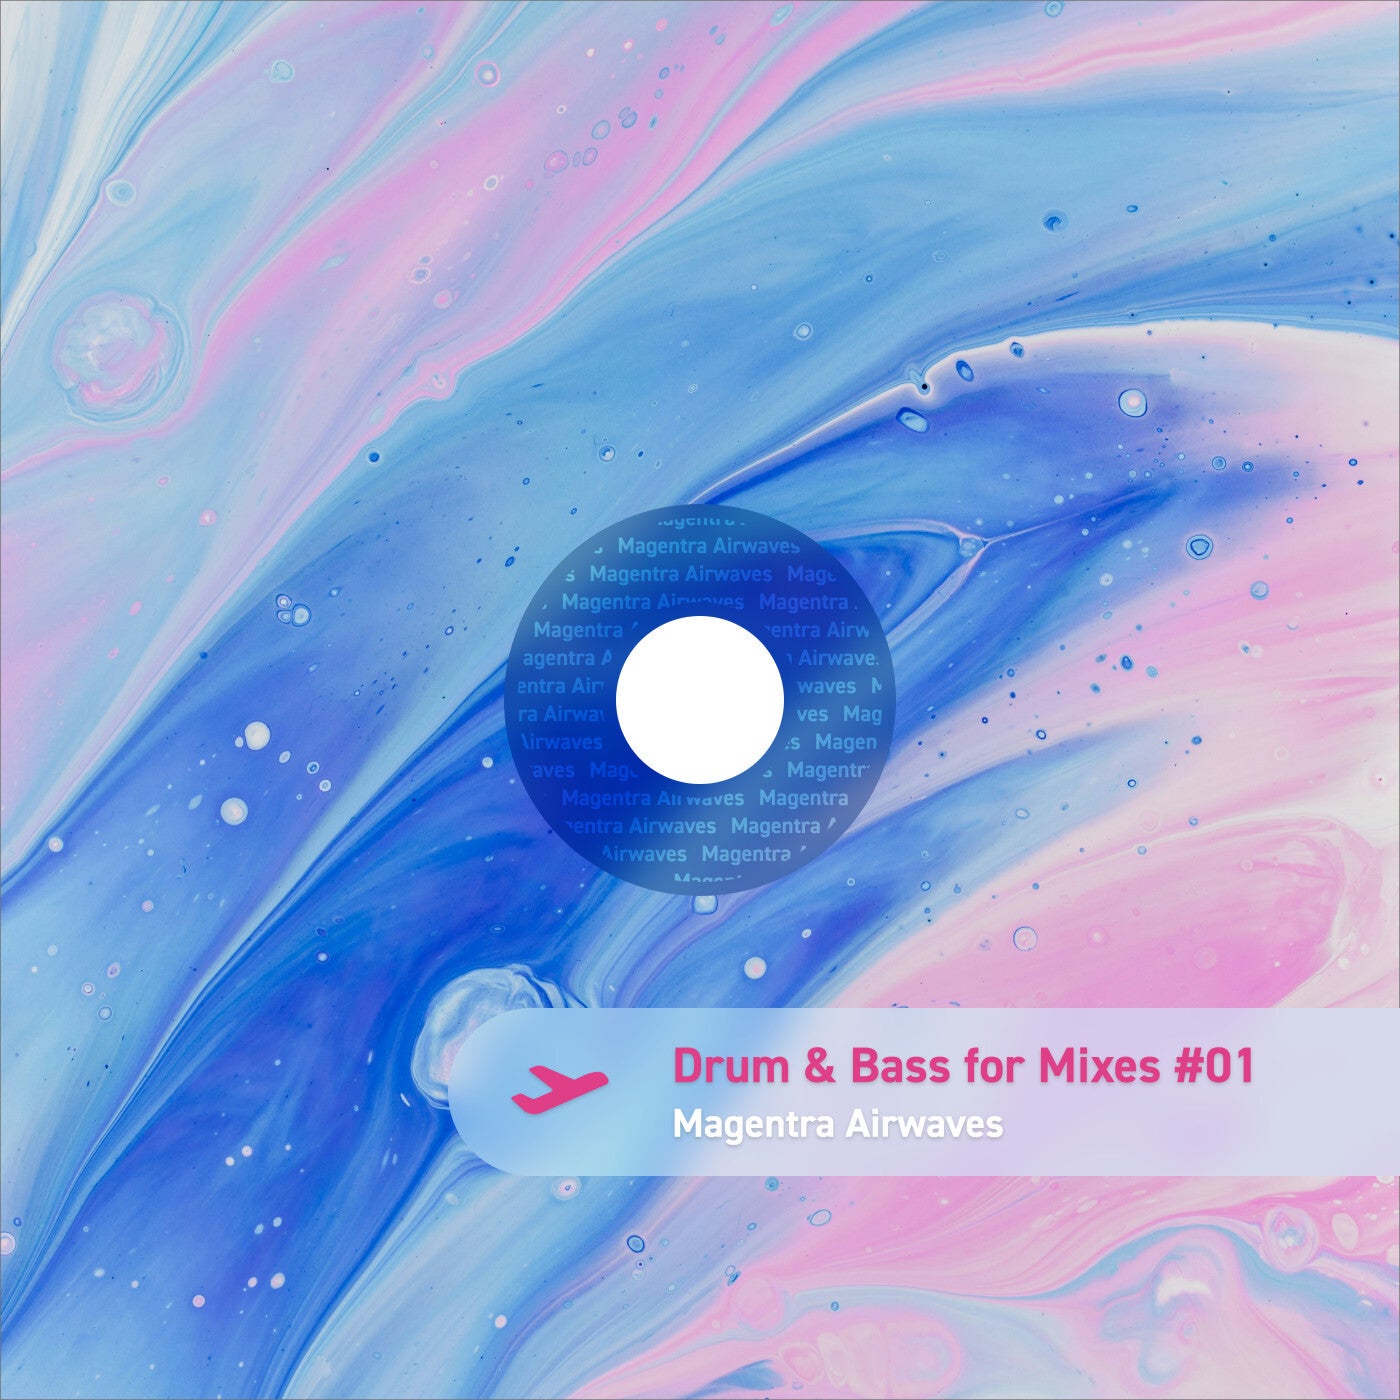 Drum & Bass for Mixes #01